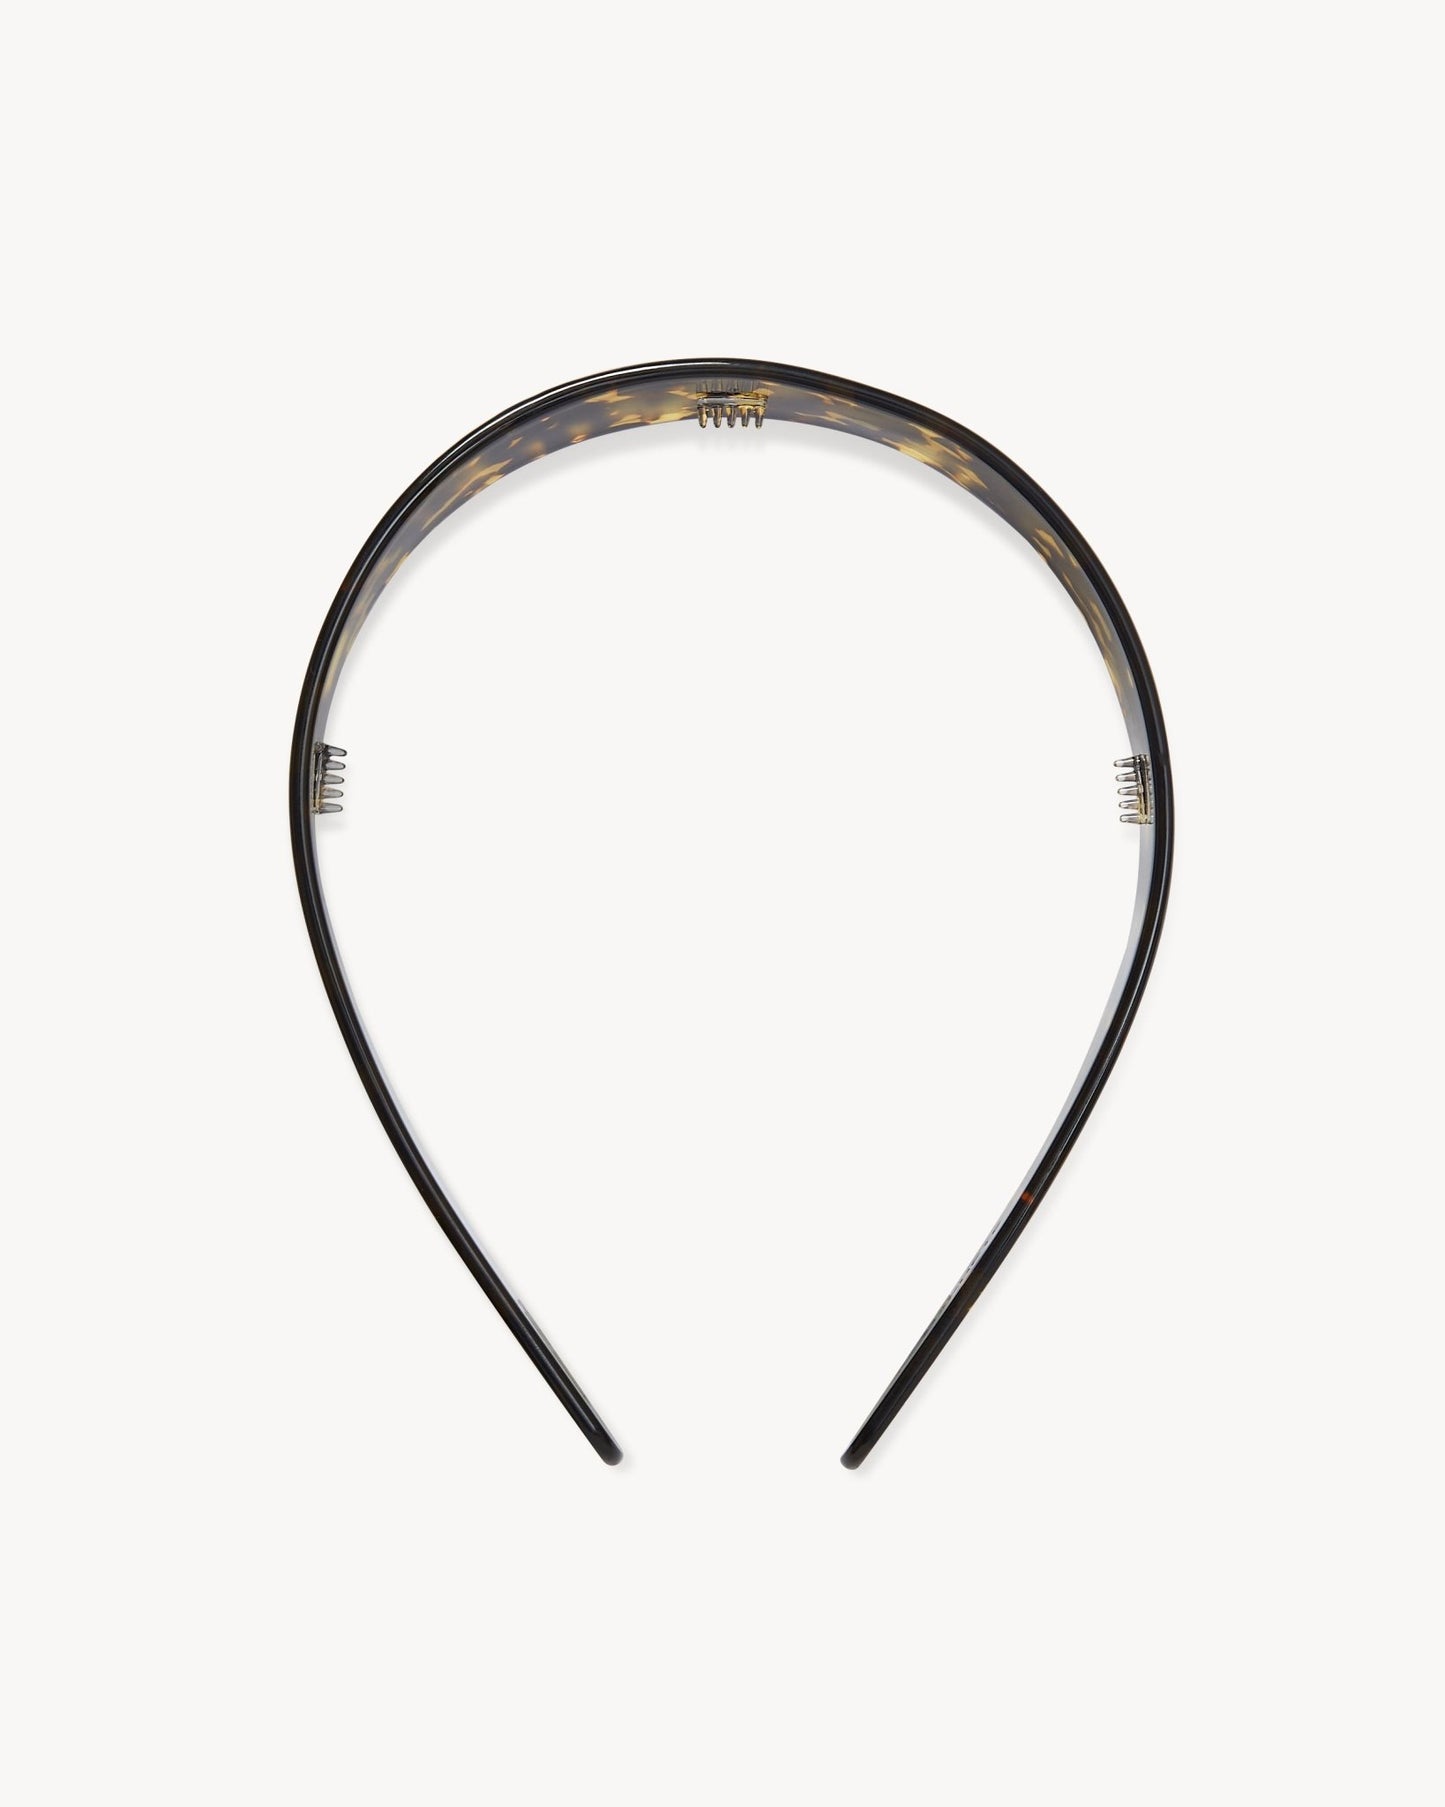 Wide Headband in Dark Tortoise - MACHETE